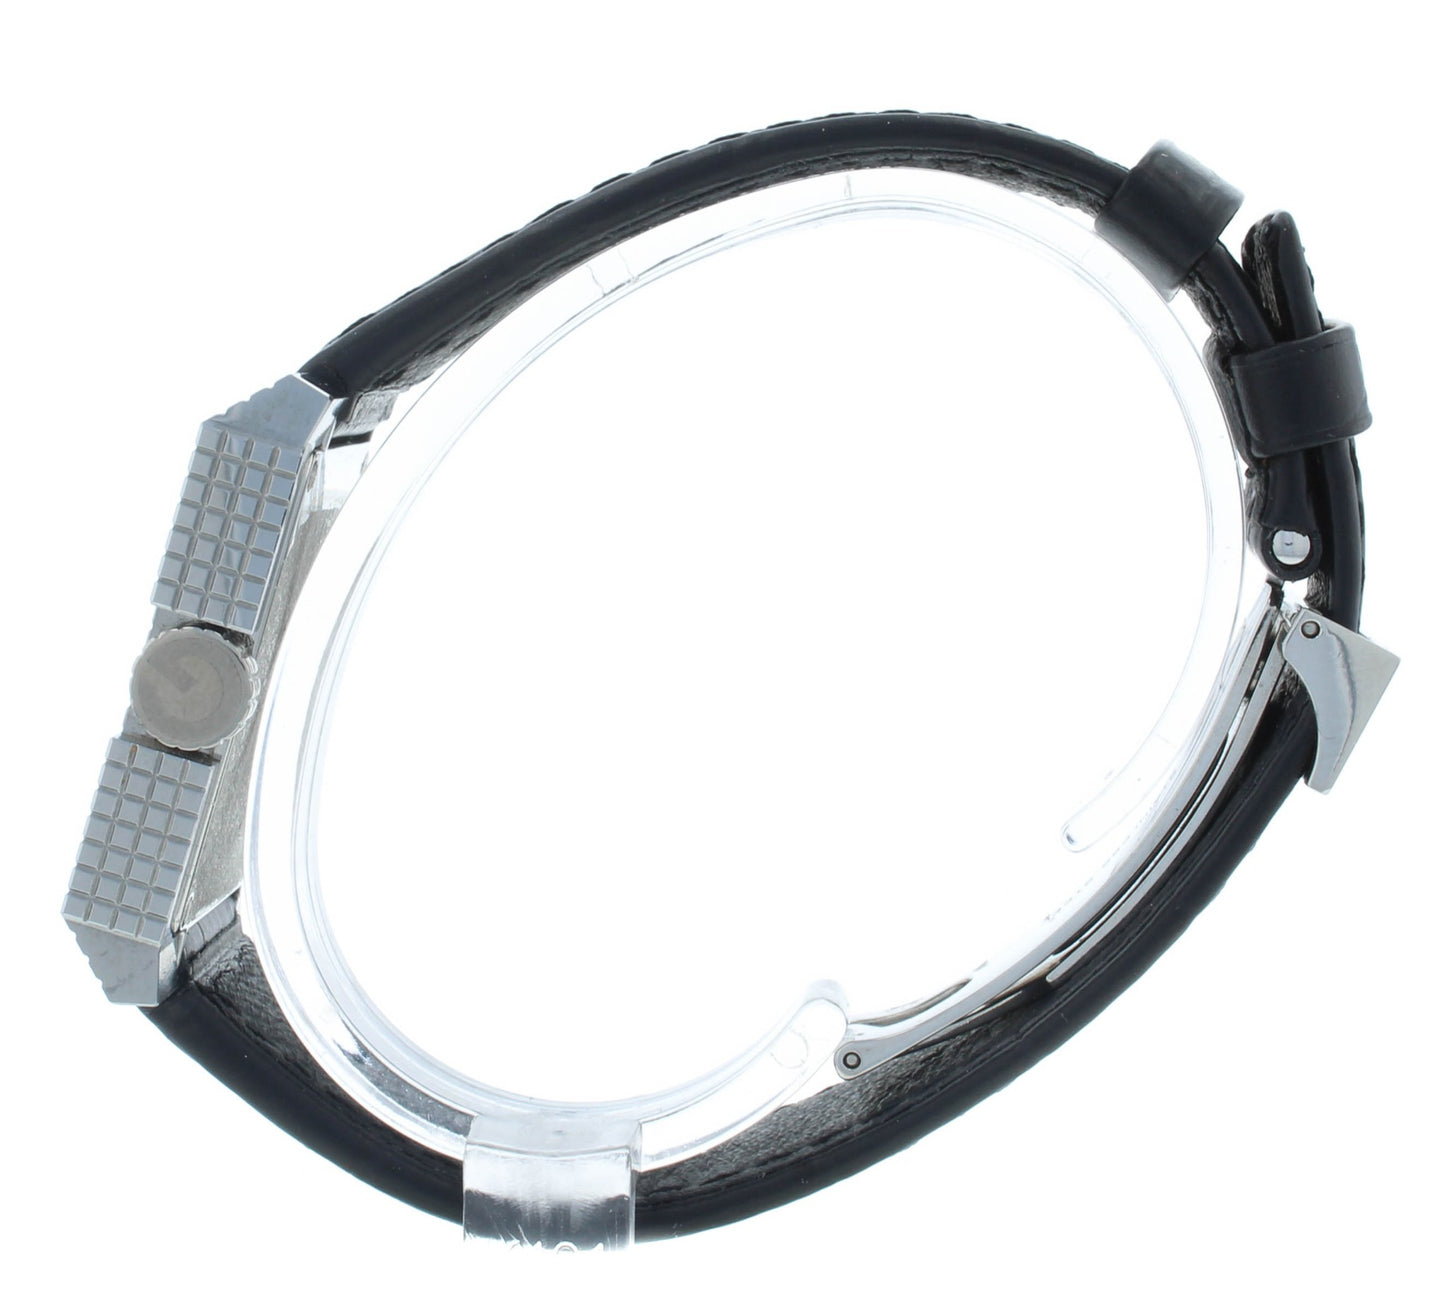 Gucci Stainless Steel Black Dial Leather Strap Quartz 30mm Men's Watch 7100M